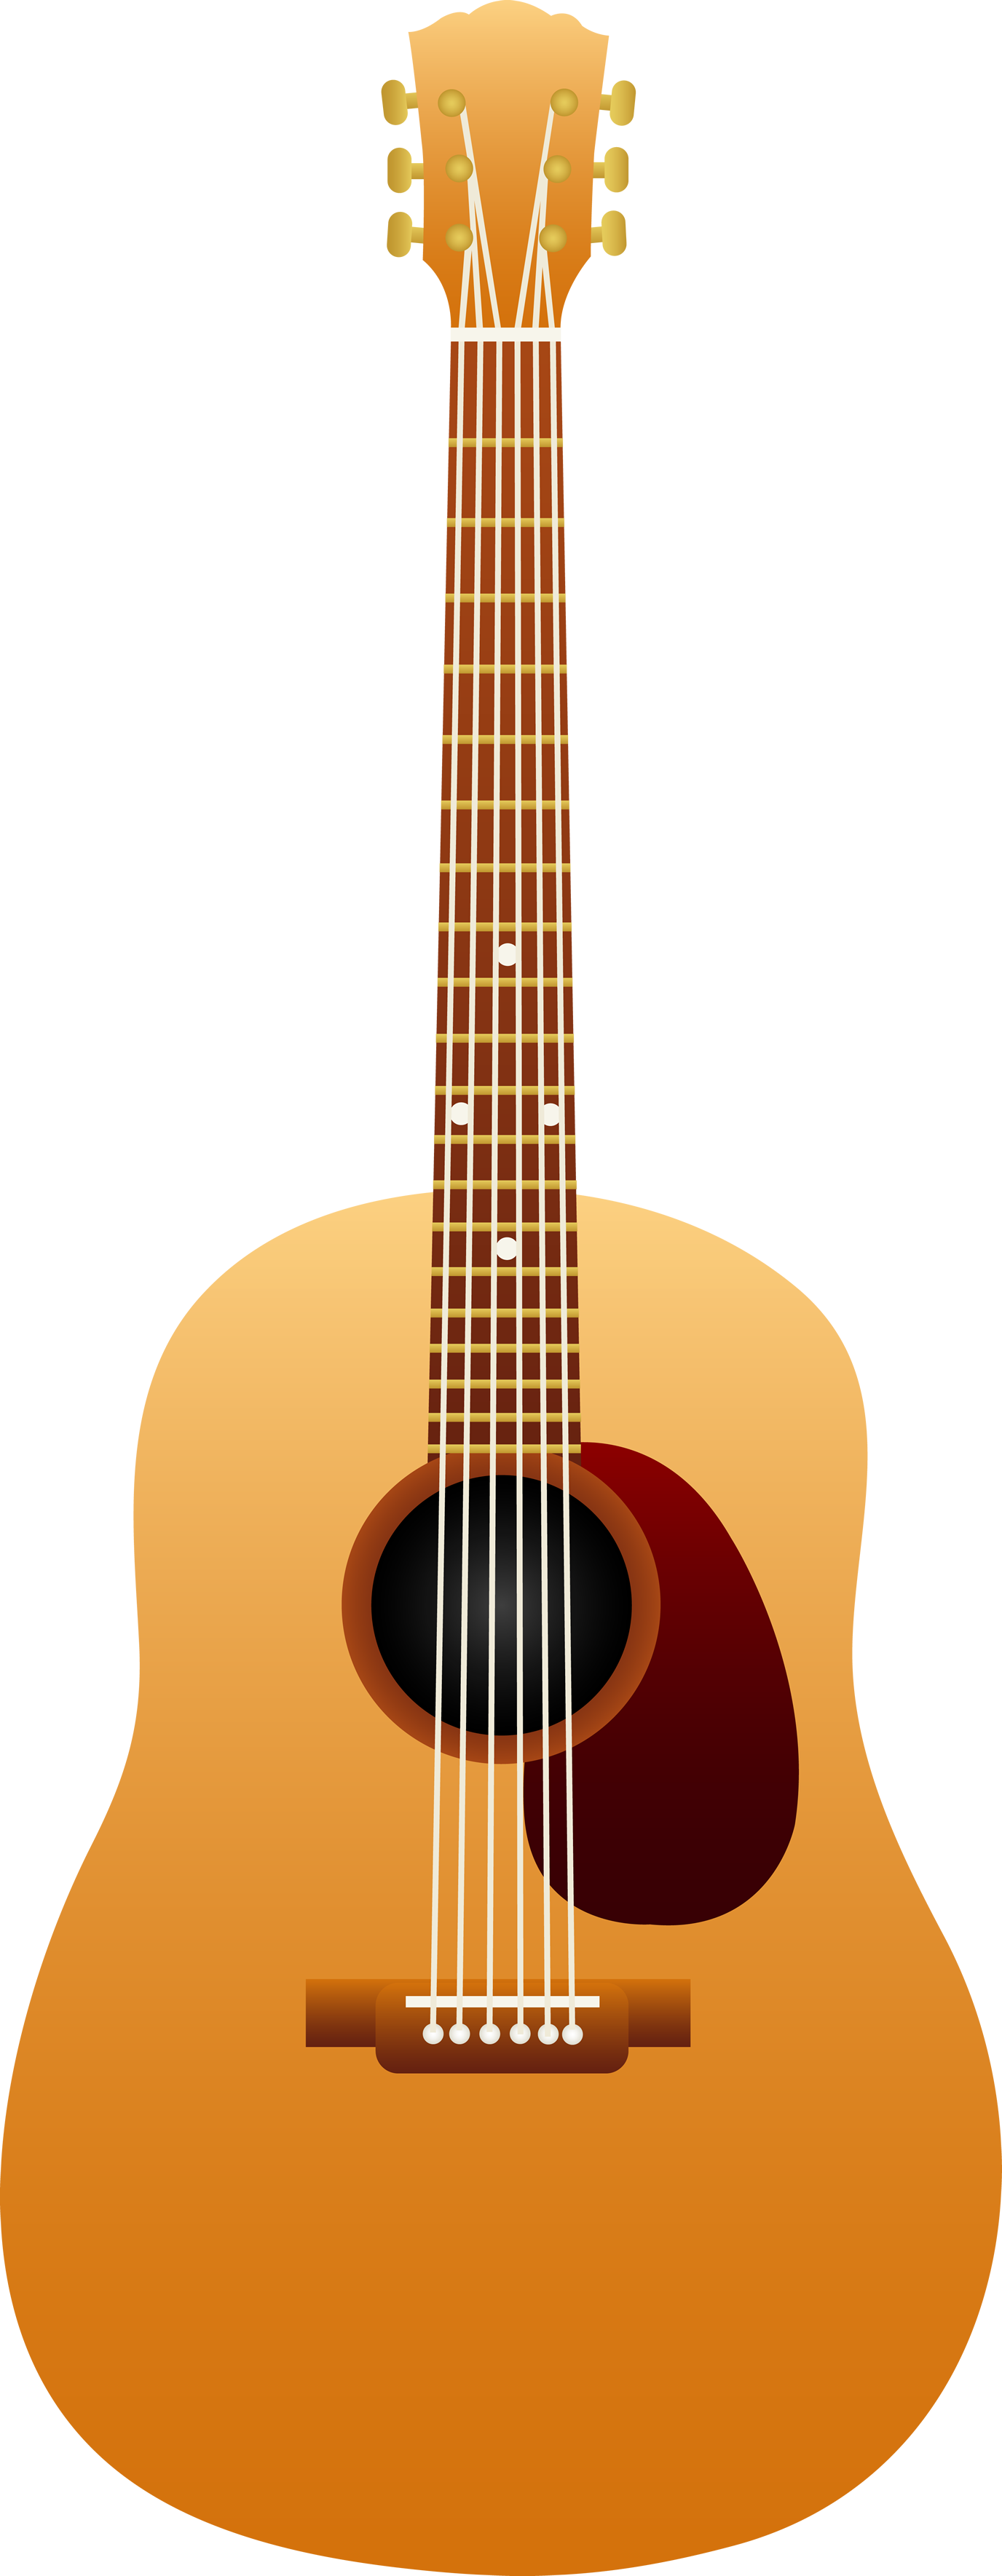 Acoustic Guitar PNG Image - PurePNG | Free transparent CC0 PNG Image Library